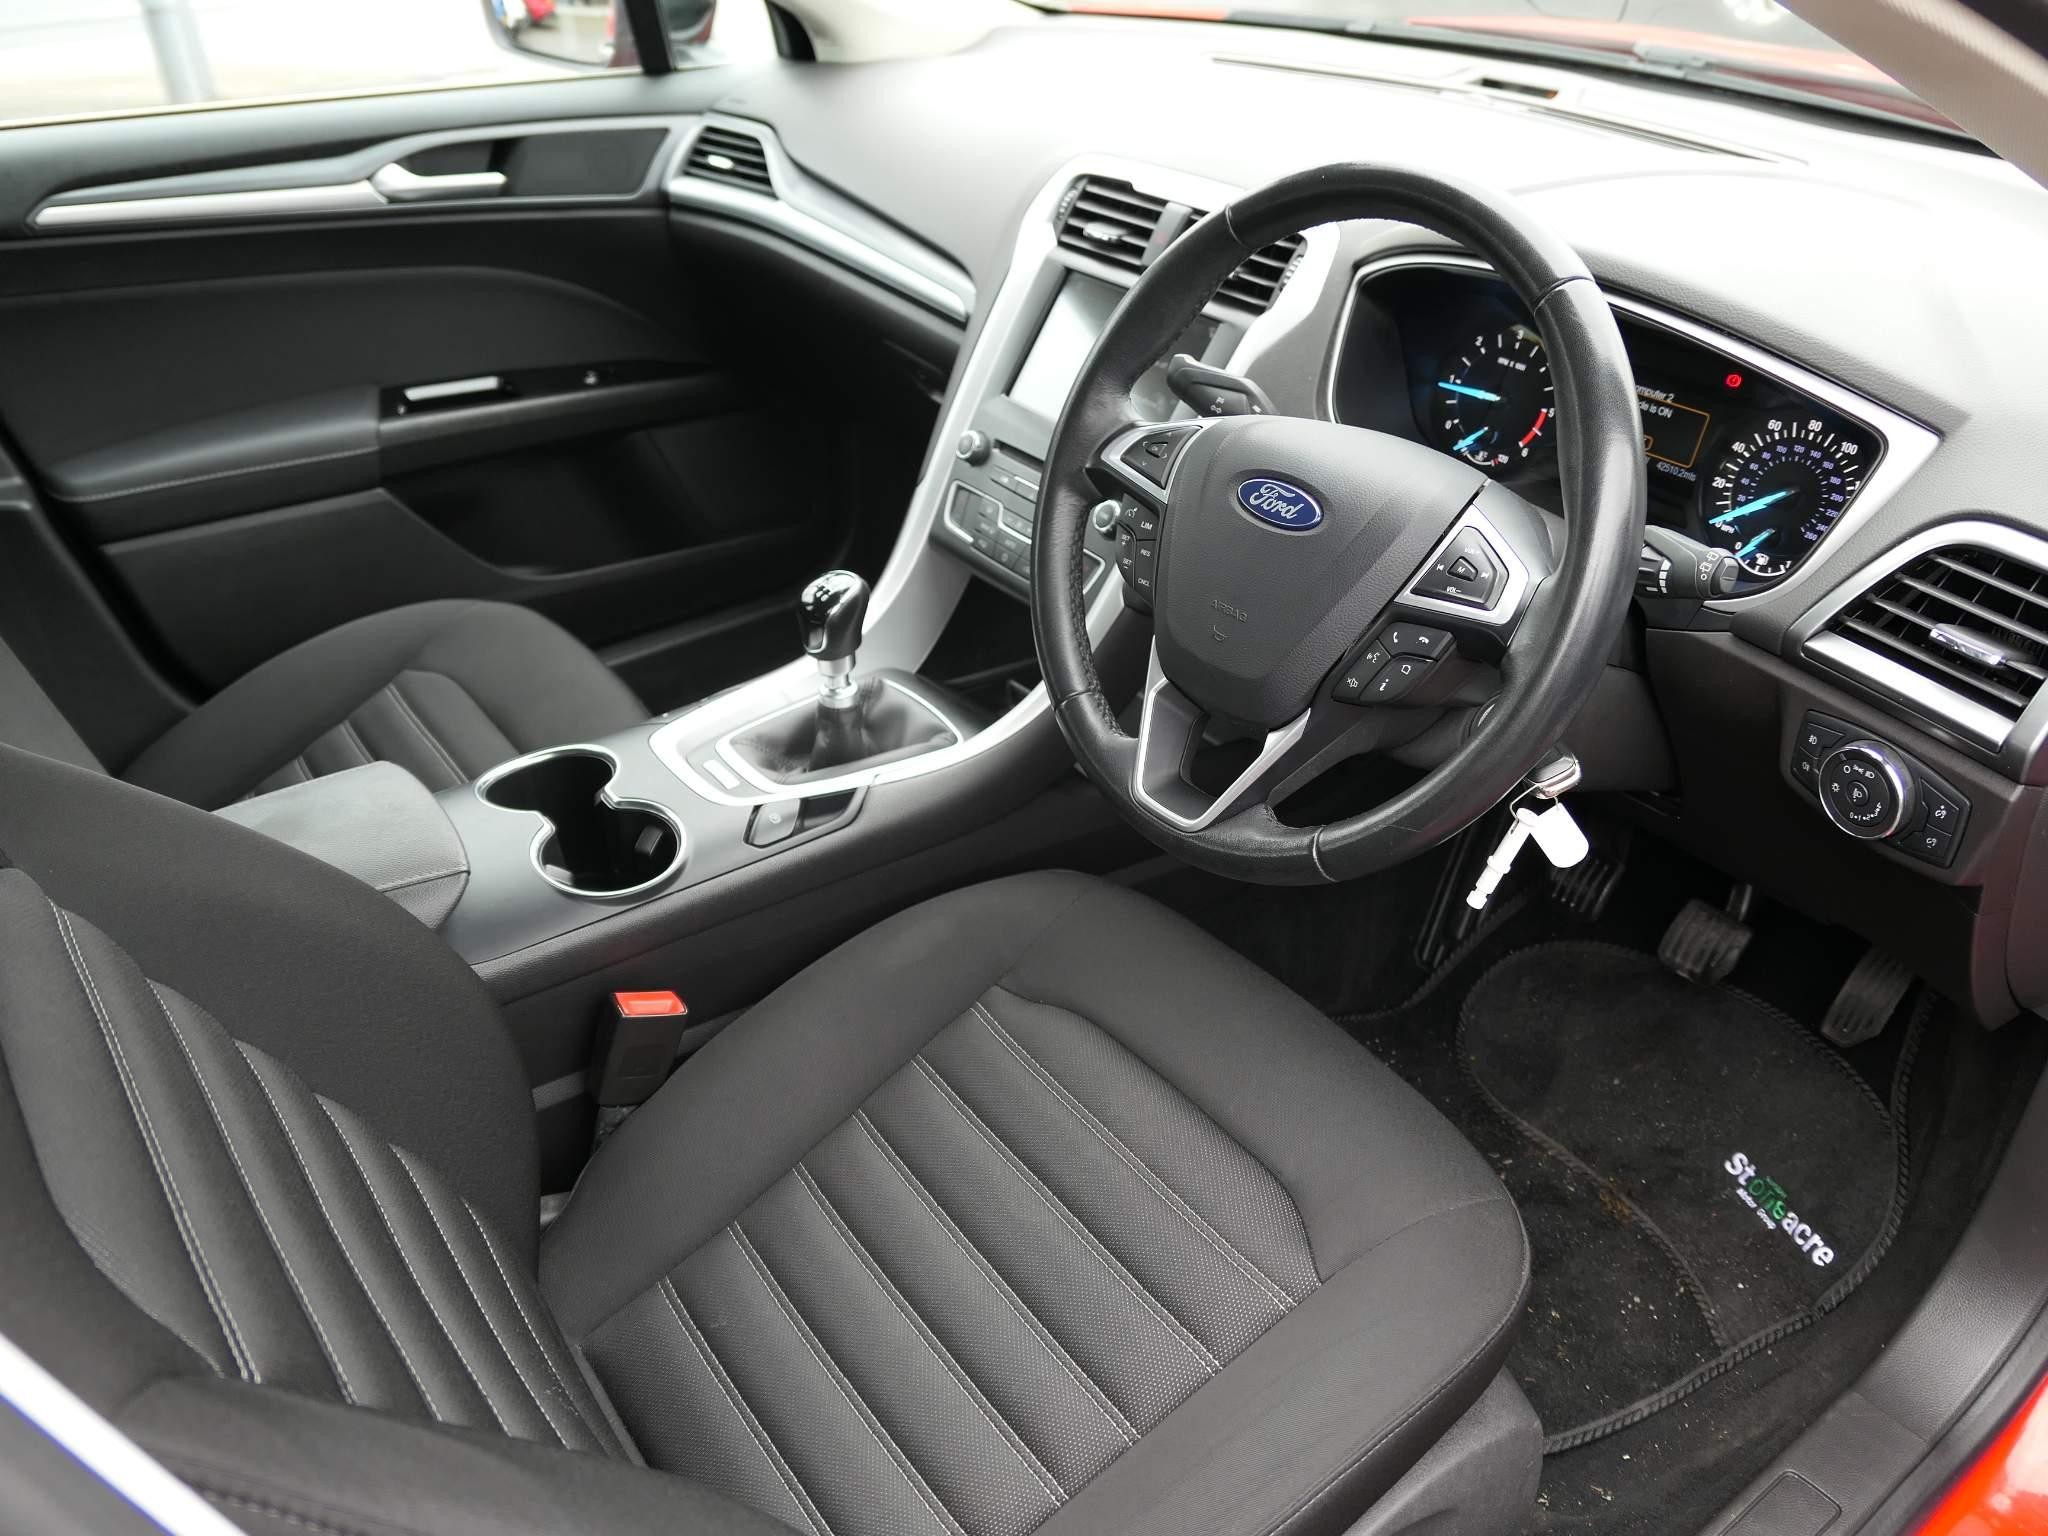 Ford Mondeo 1.5 TDCi ECOnetic Zetec 5dr (BU18VTJ) image 13